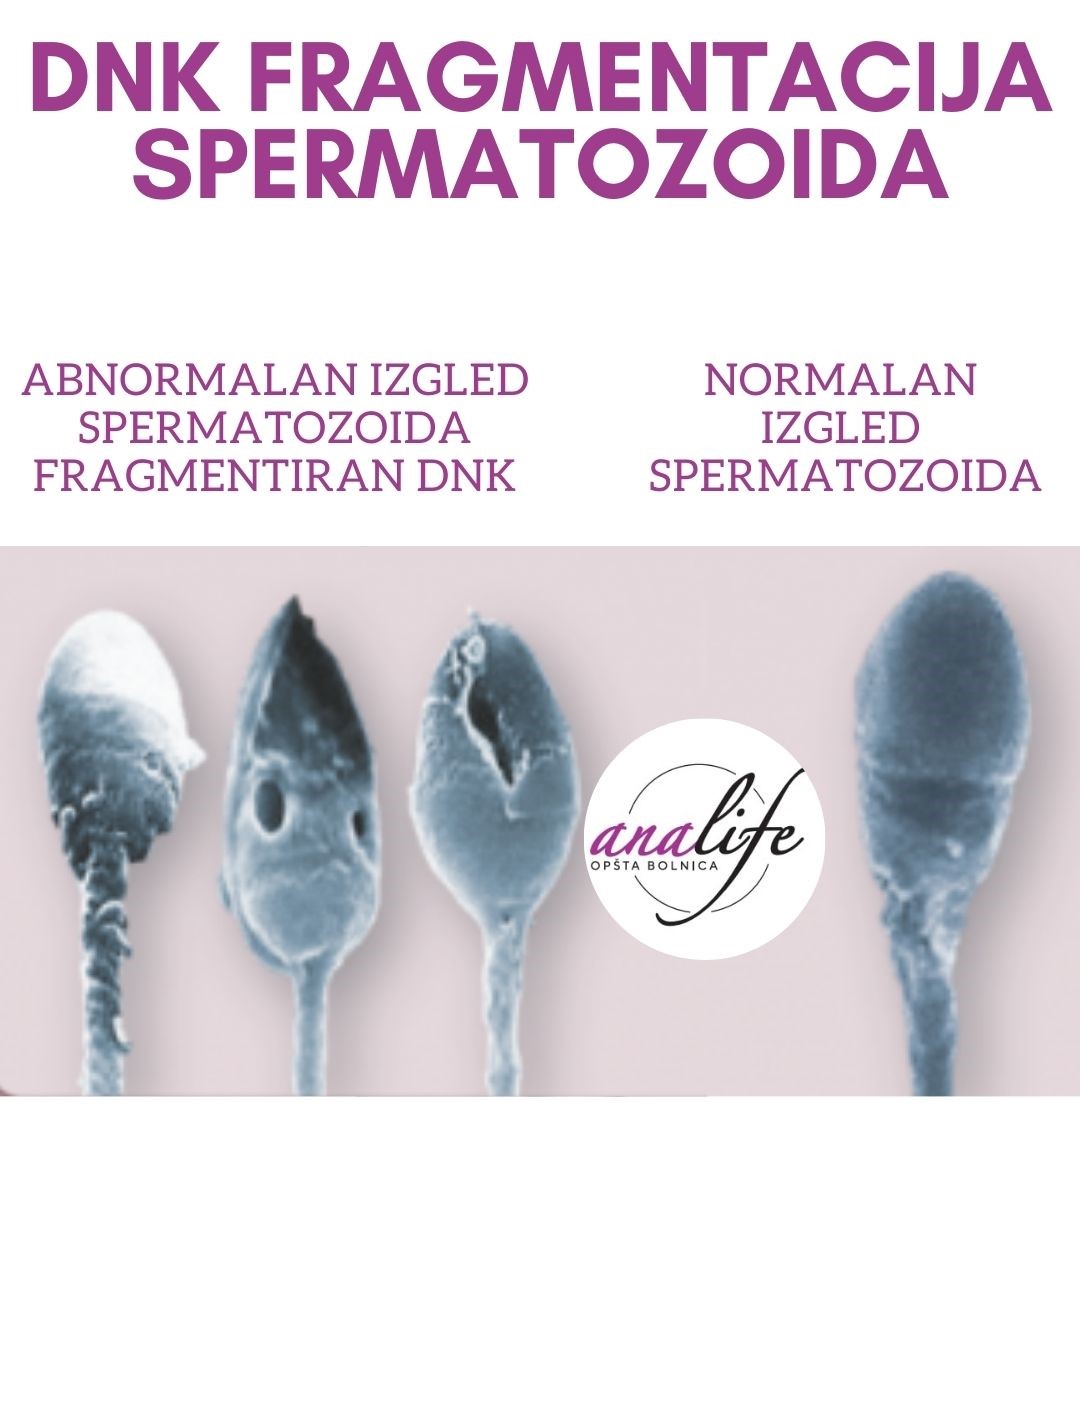 Šta je DNK fragmentacija spermatozoida?